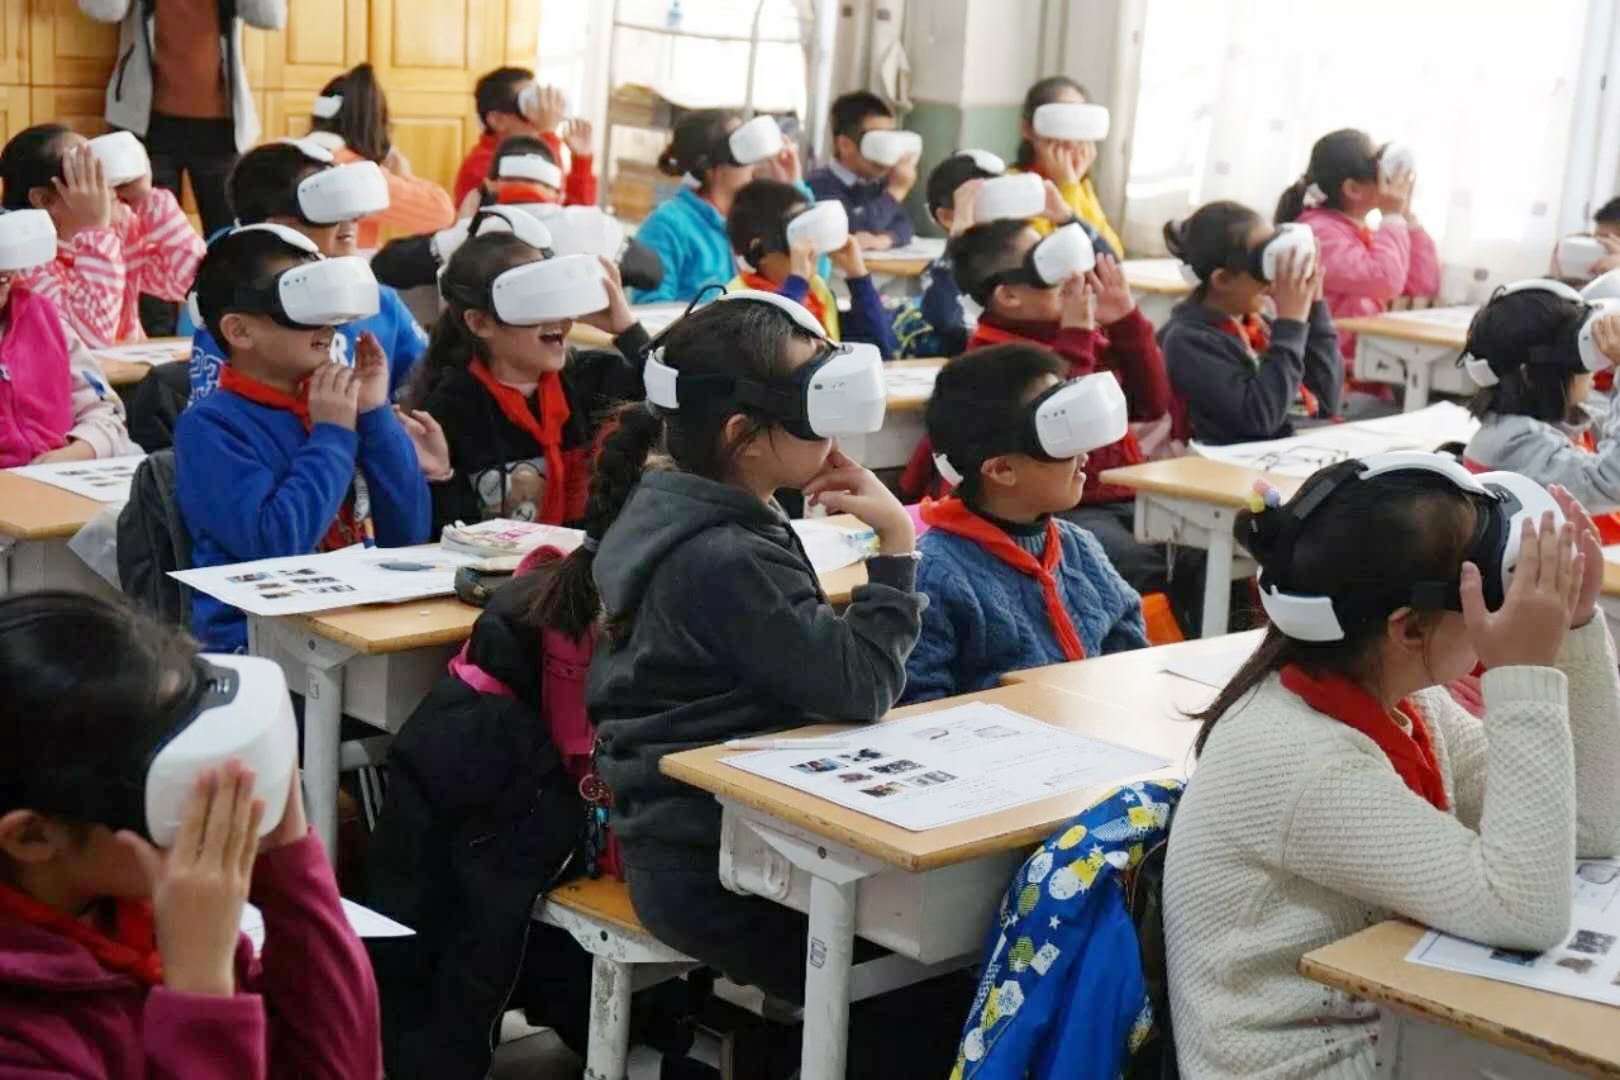 Students-in-Beijing-초등학교-학교-Tongzhou-Branch-School-used-DPVR-M2-virtual-reality-headset-in-the-classroom